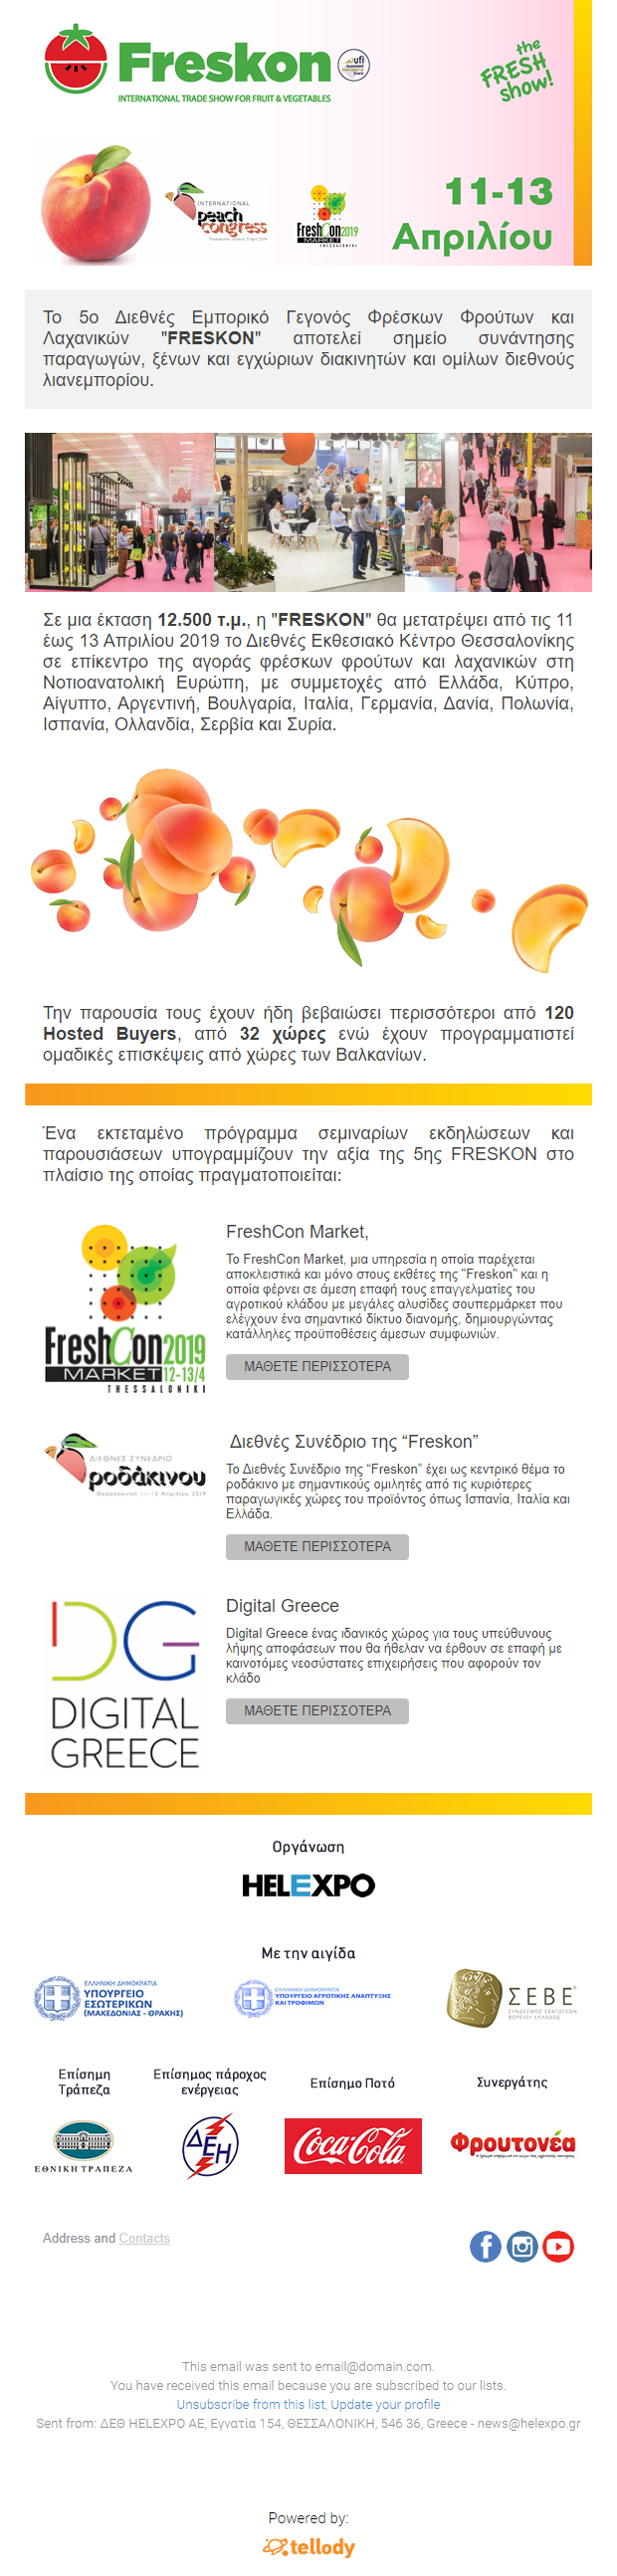 Freskon 2019 - Διεθνές Εμπορικό Γεγονός Φρέσκων Φρούτων και Λαχανικών